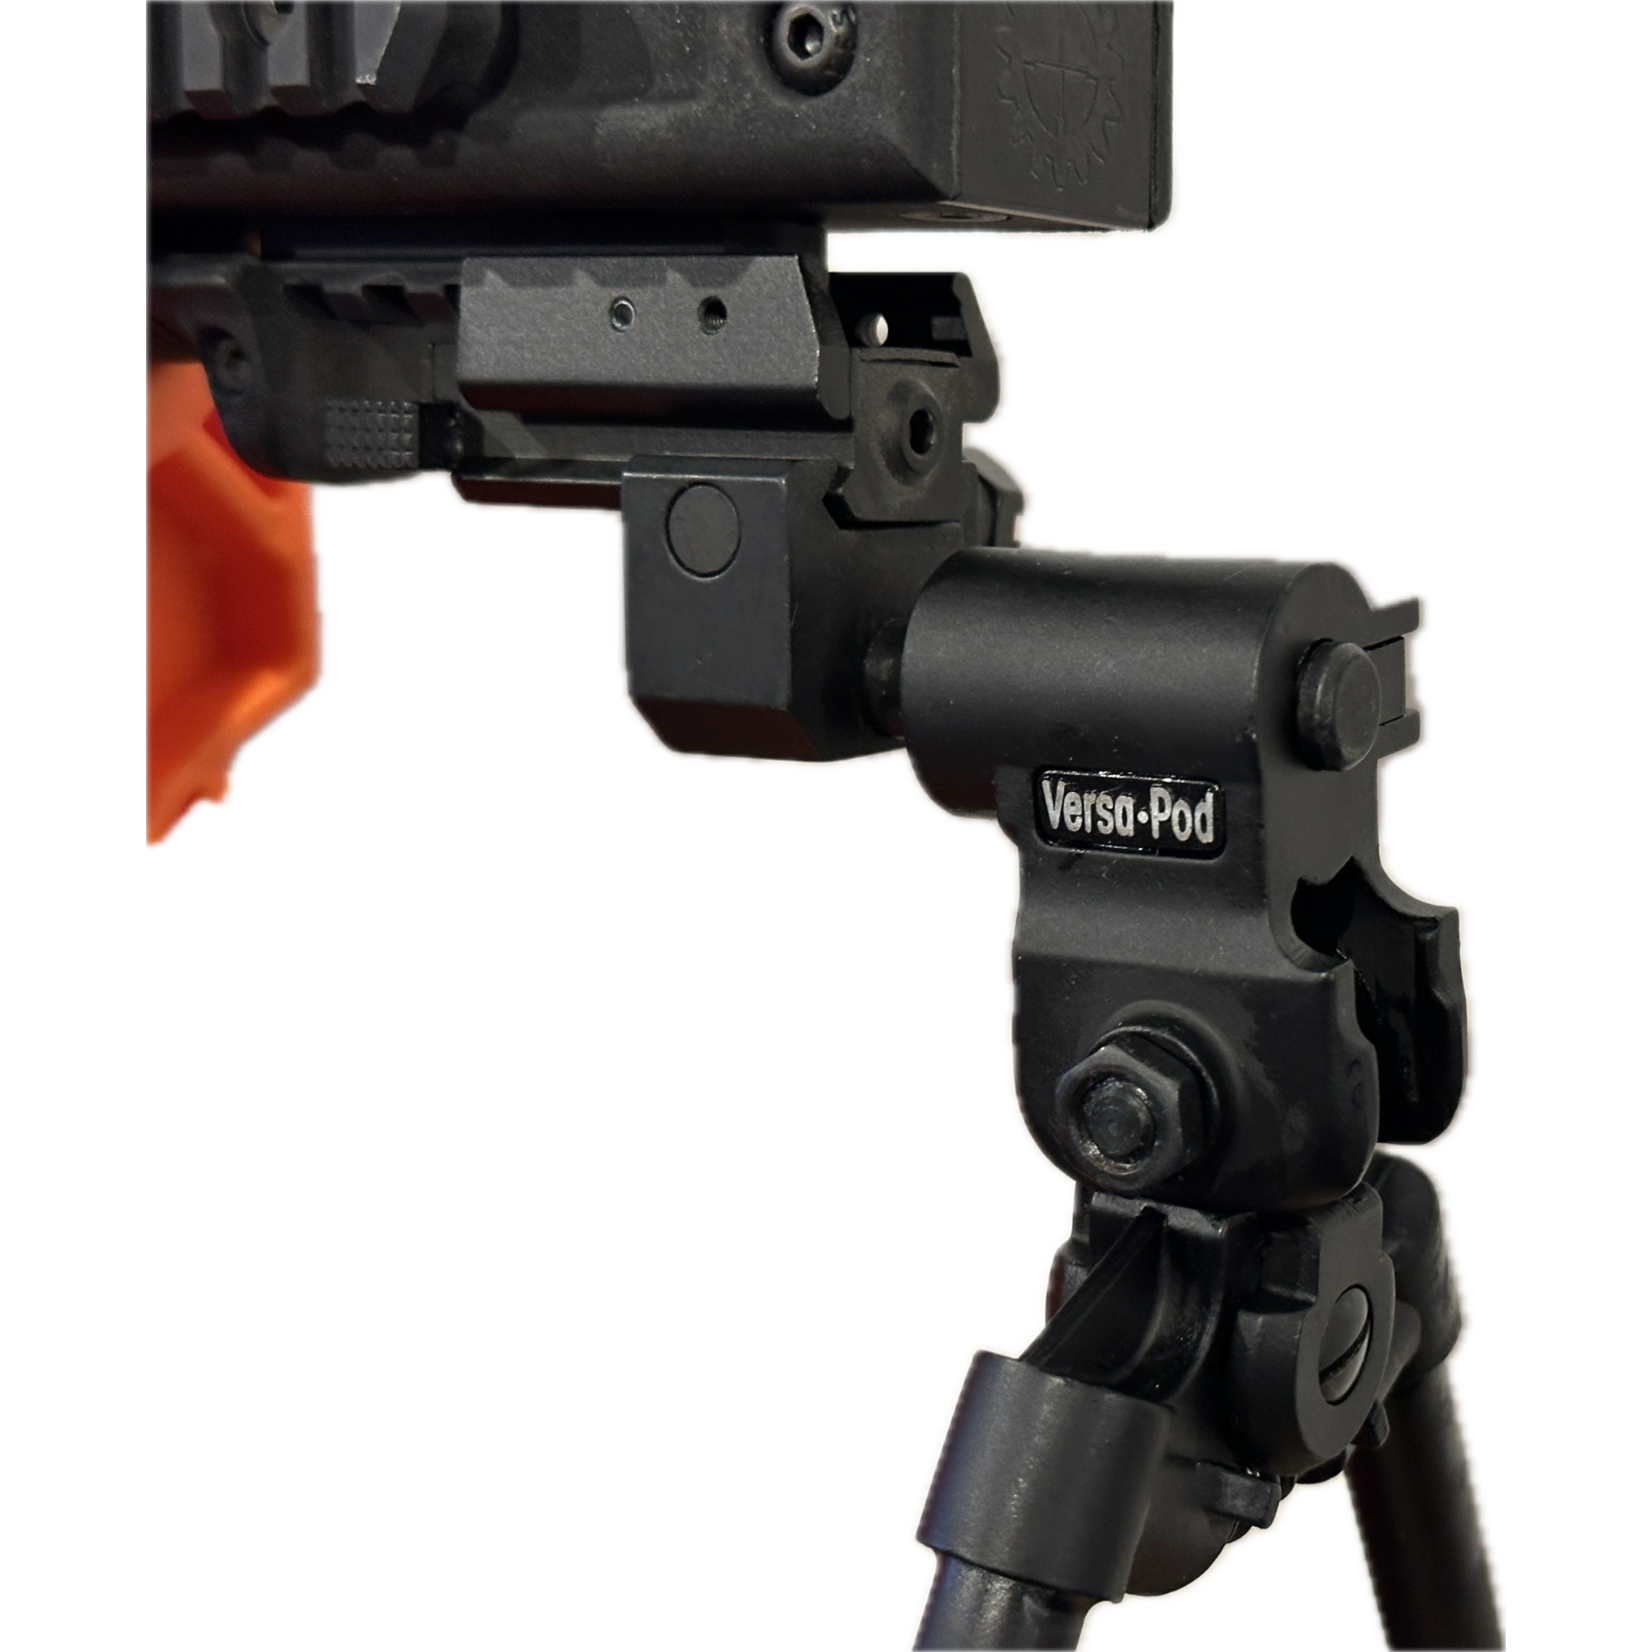 CCOP Bipod Picatinny Tactical Adaptor to suit Versa pod and similar